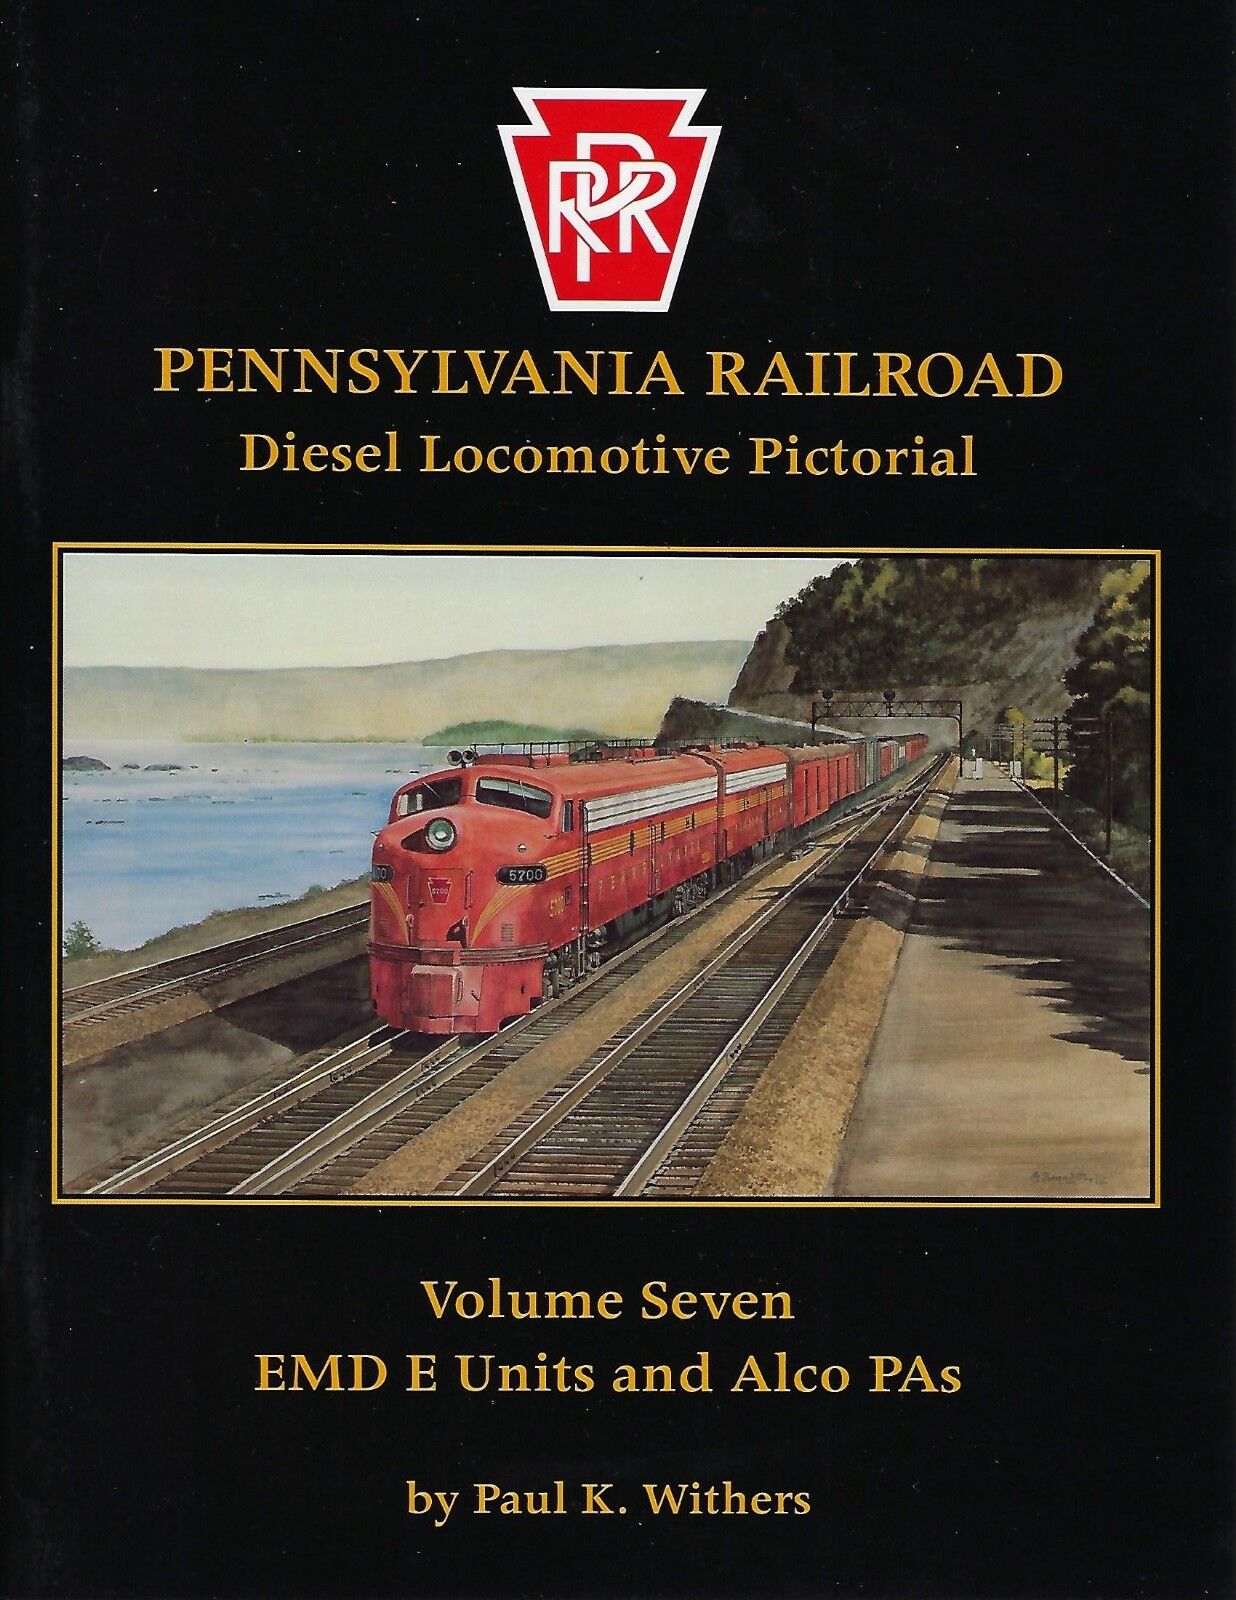 PRR Diesel Locomotive Pictorial, Vol. 7 - EMD E Units and ALCo PAs - (NEW BOOK)